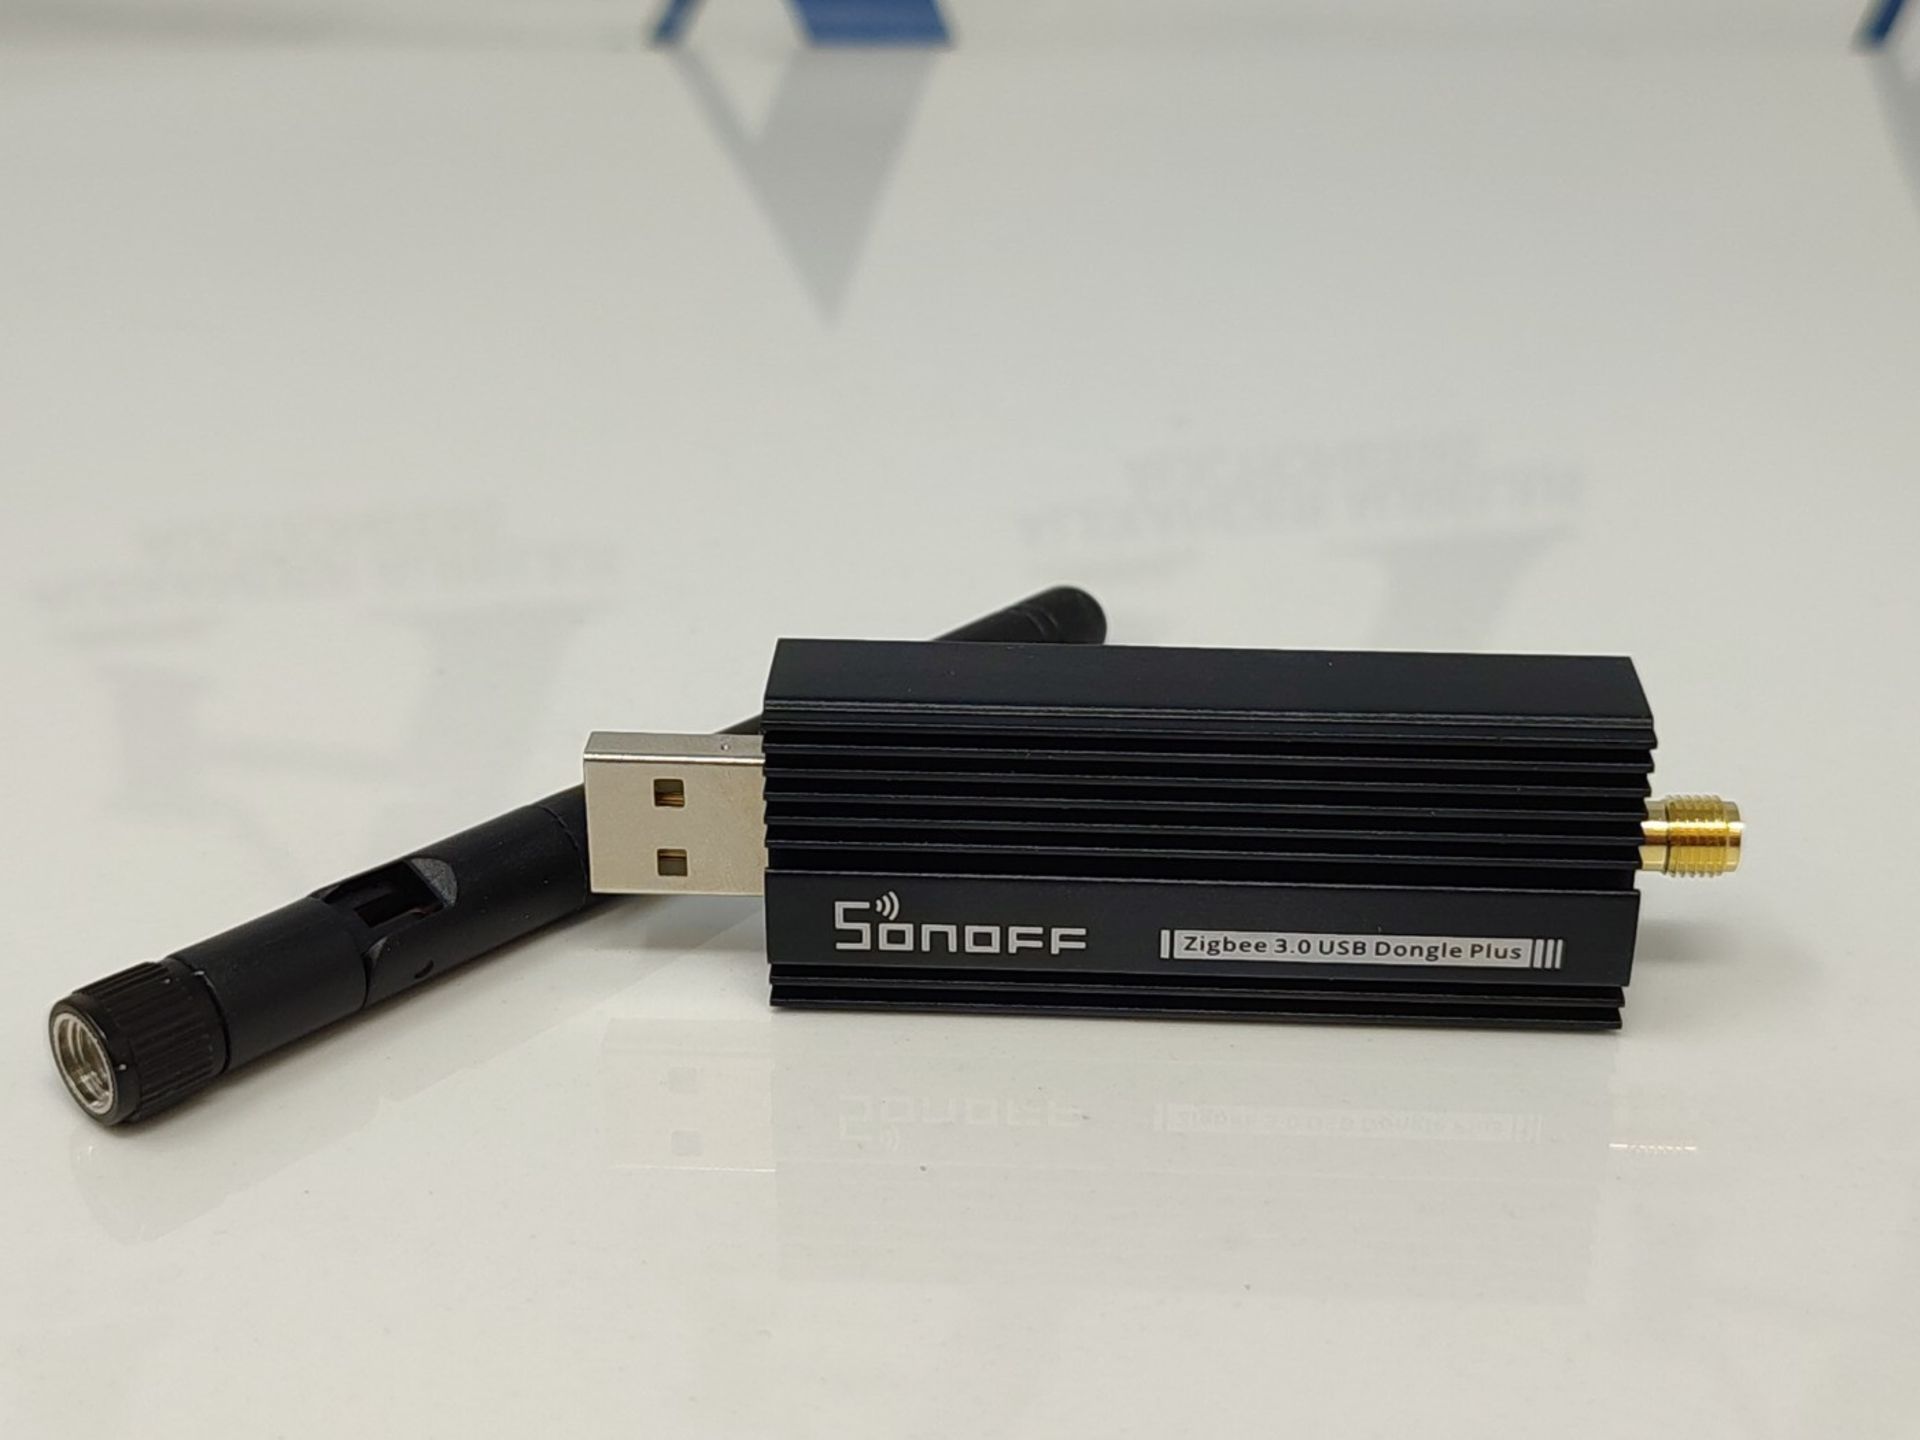 Zigbee Gateway, ZBDongle-E USB Zigbee 3.0 USB Dongle Plus, EFR32MG21 + CH9102F Zigbee - Bild 4 aus 4